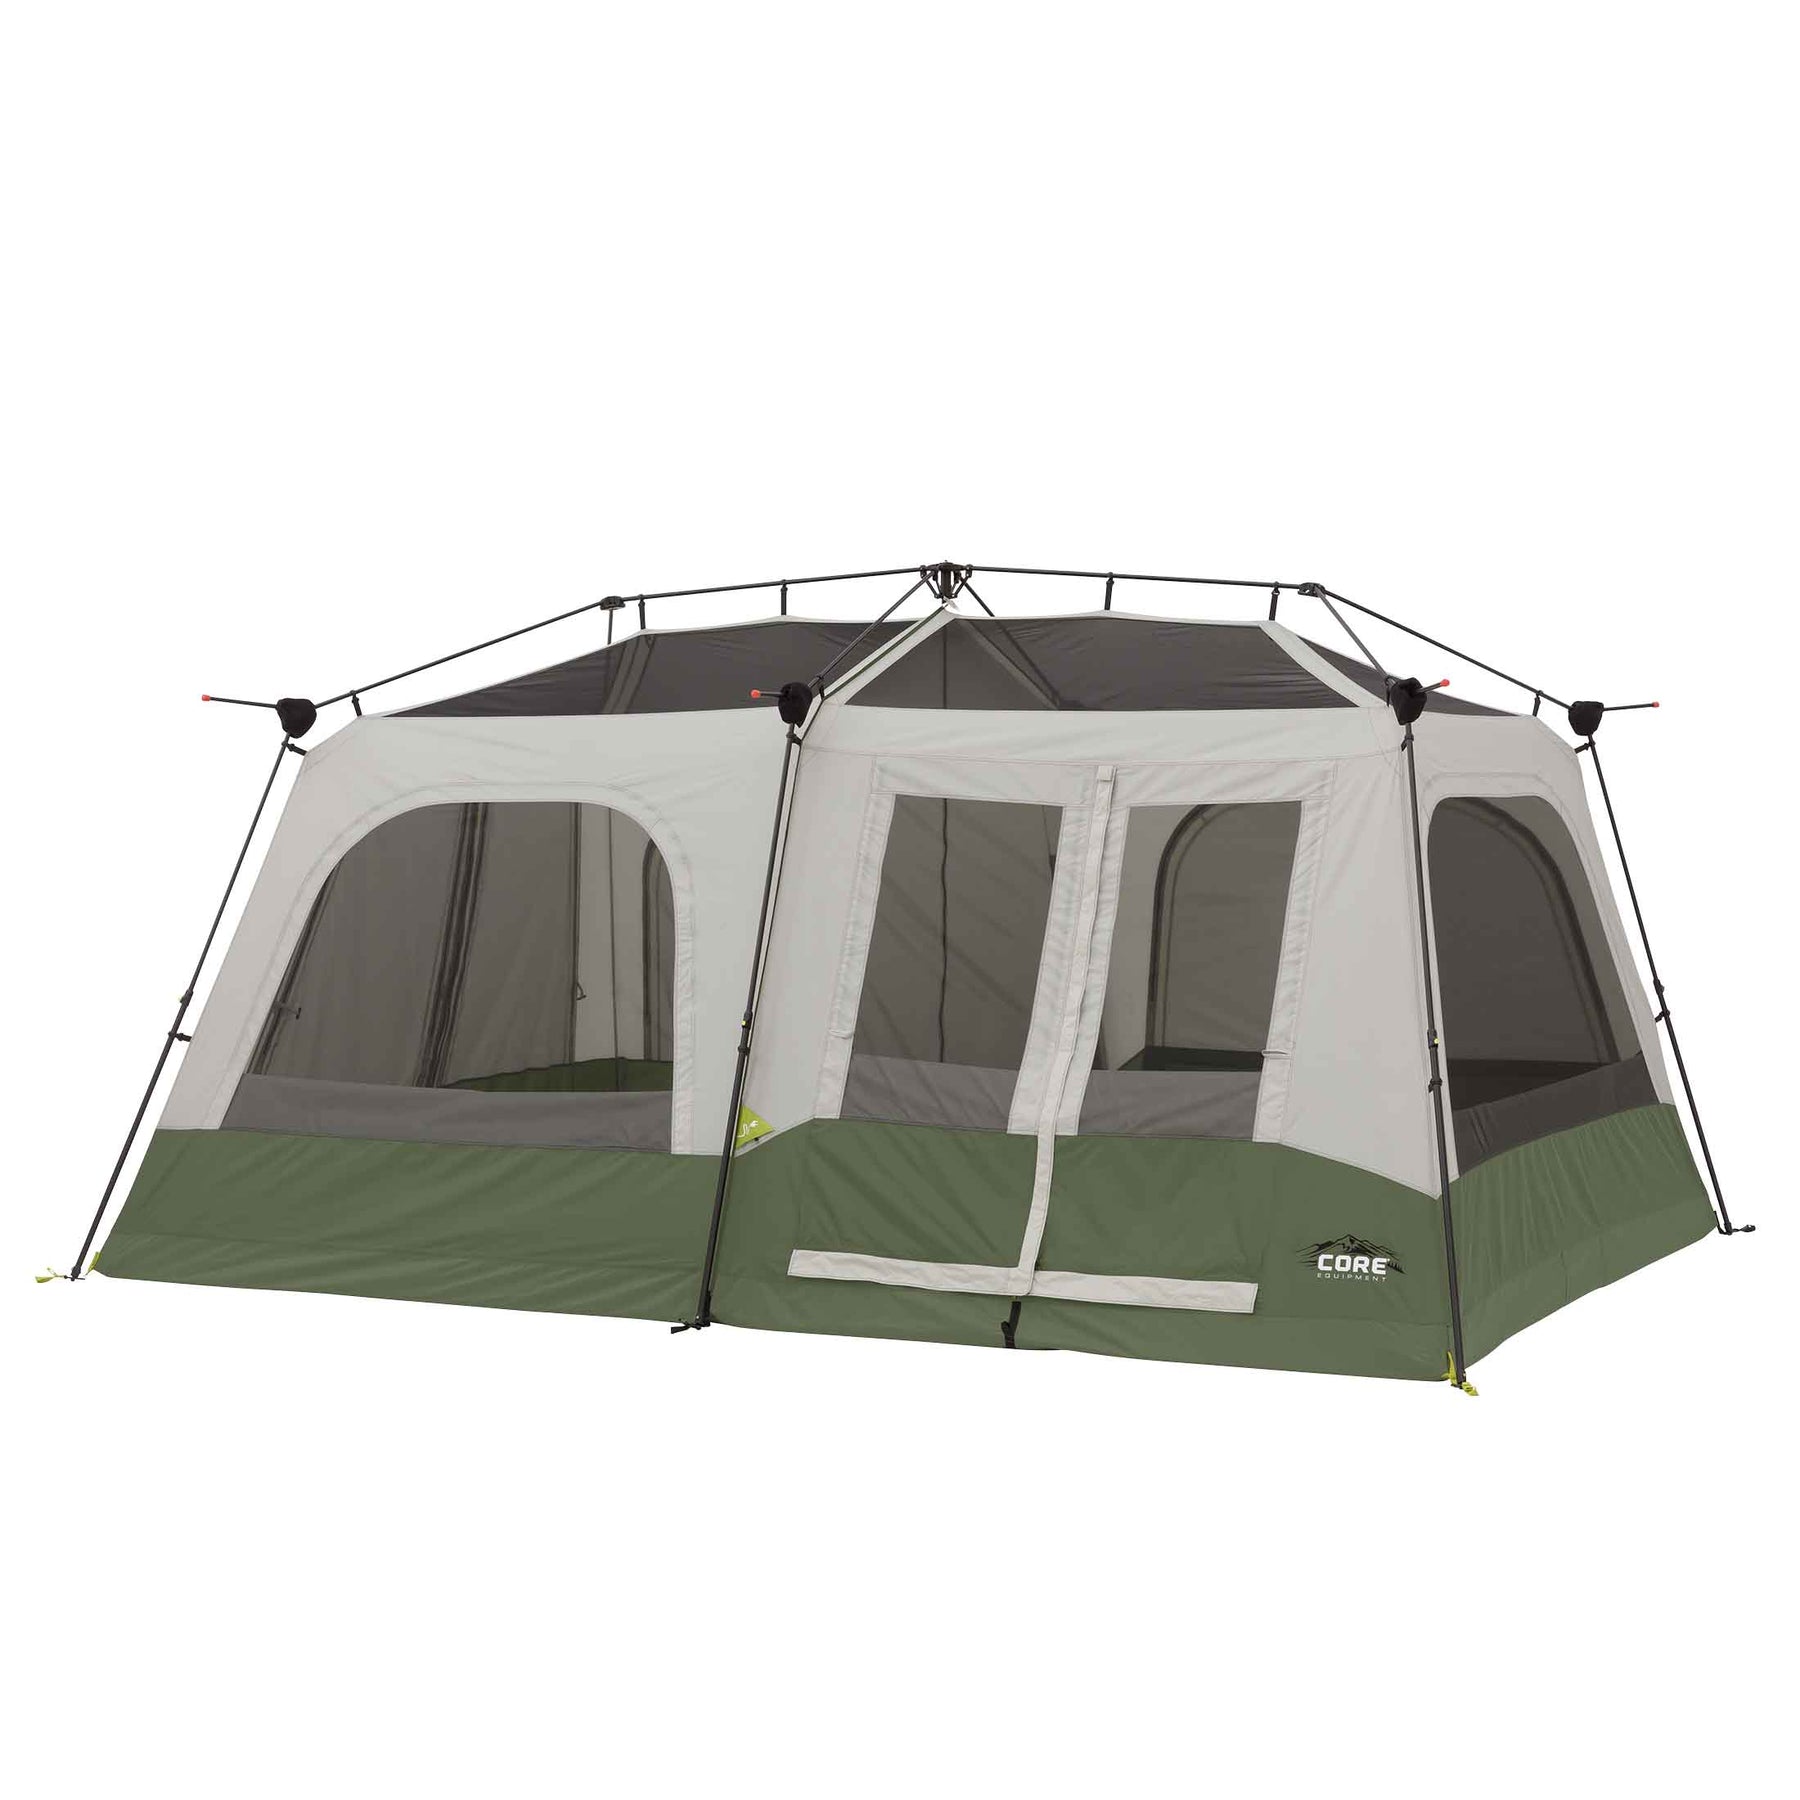 CORE 10 Person Tent, Large Multi Room Tent for Jordan